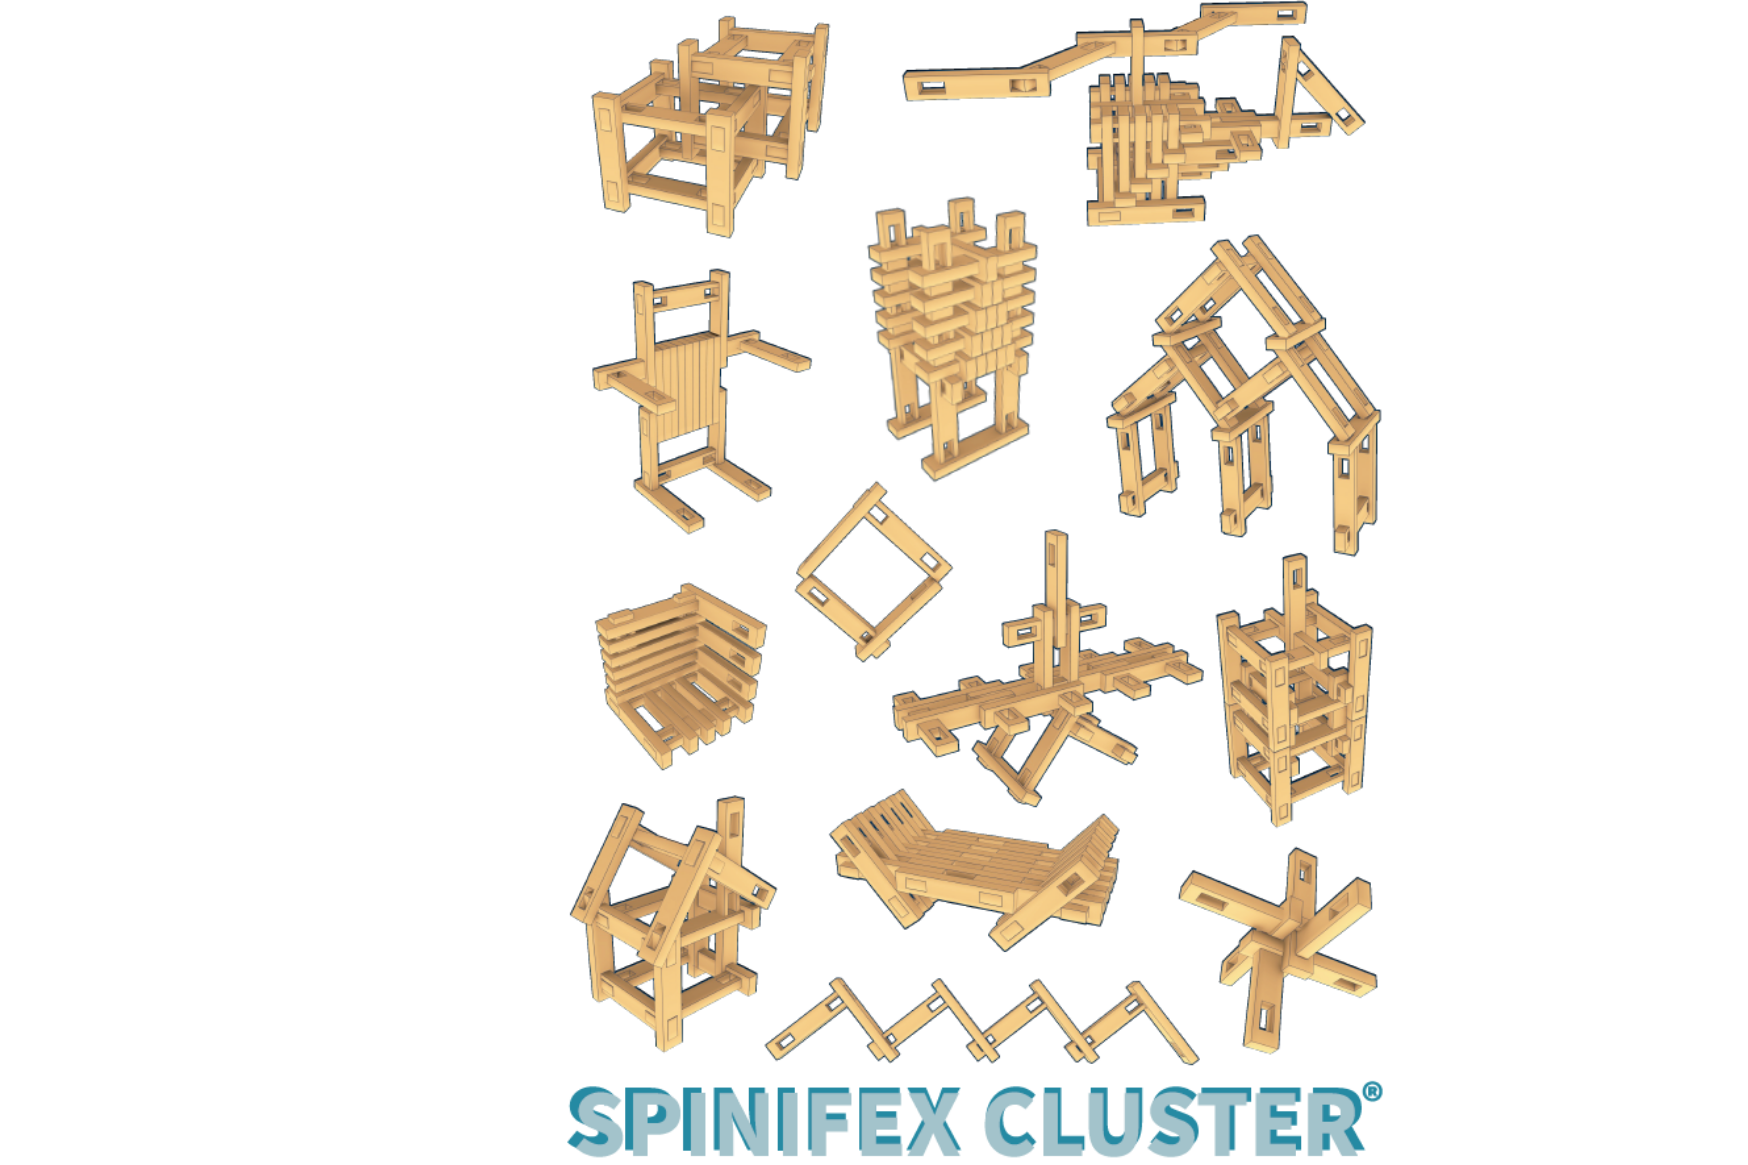 Spinefex Cluster